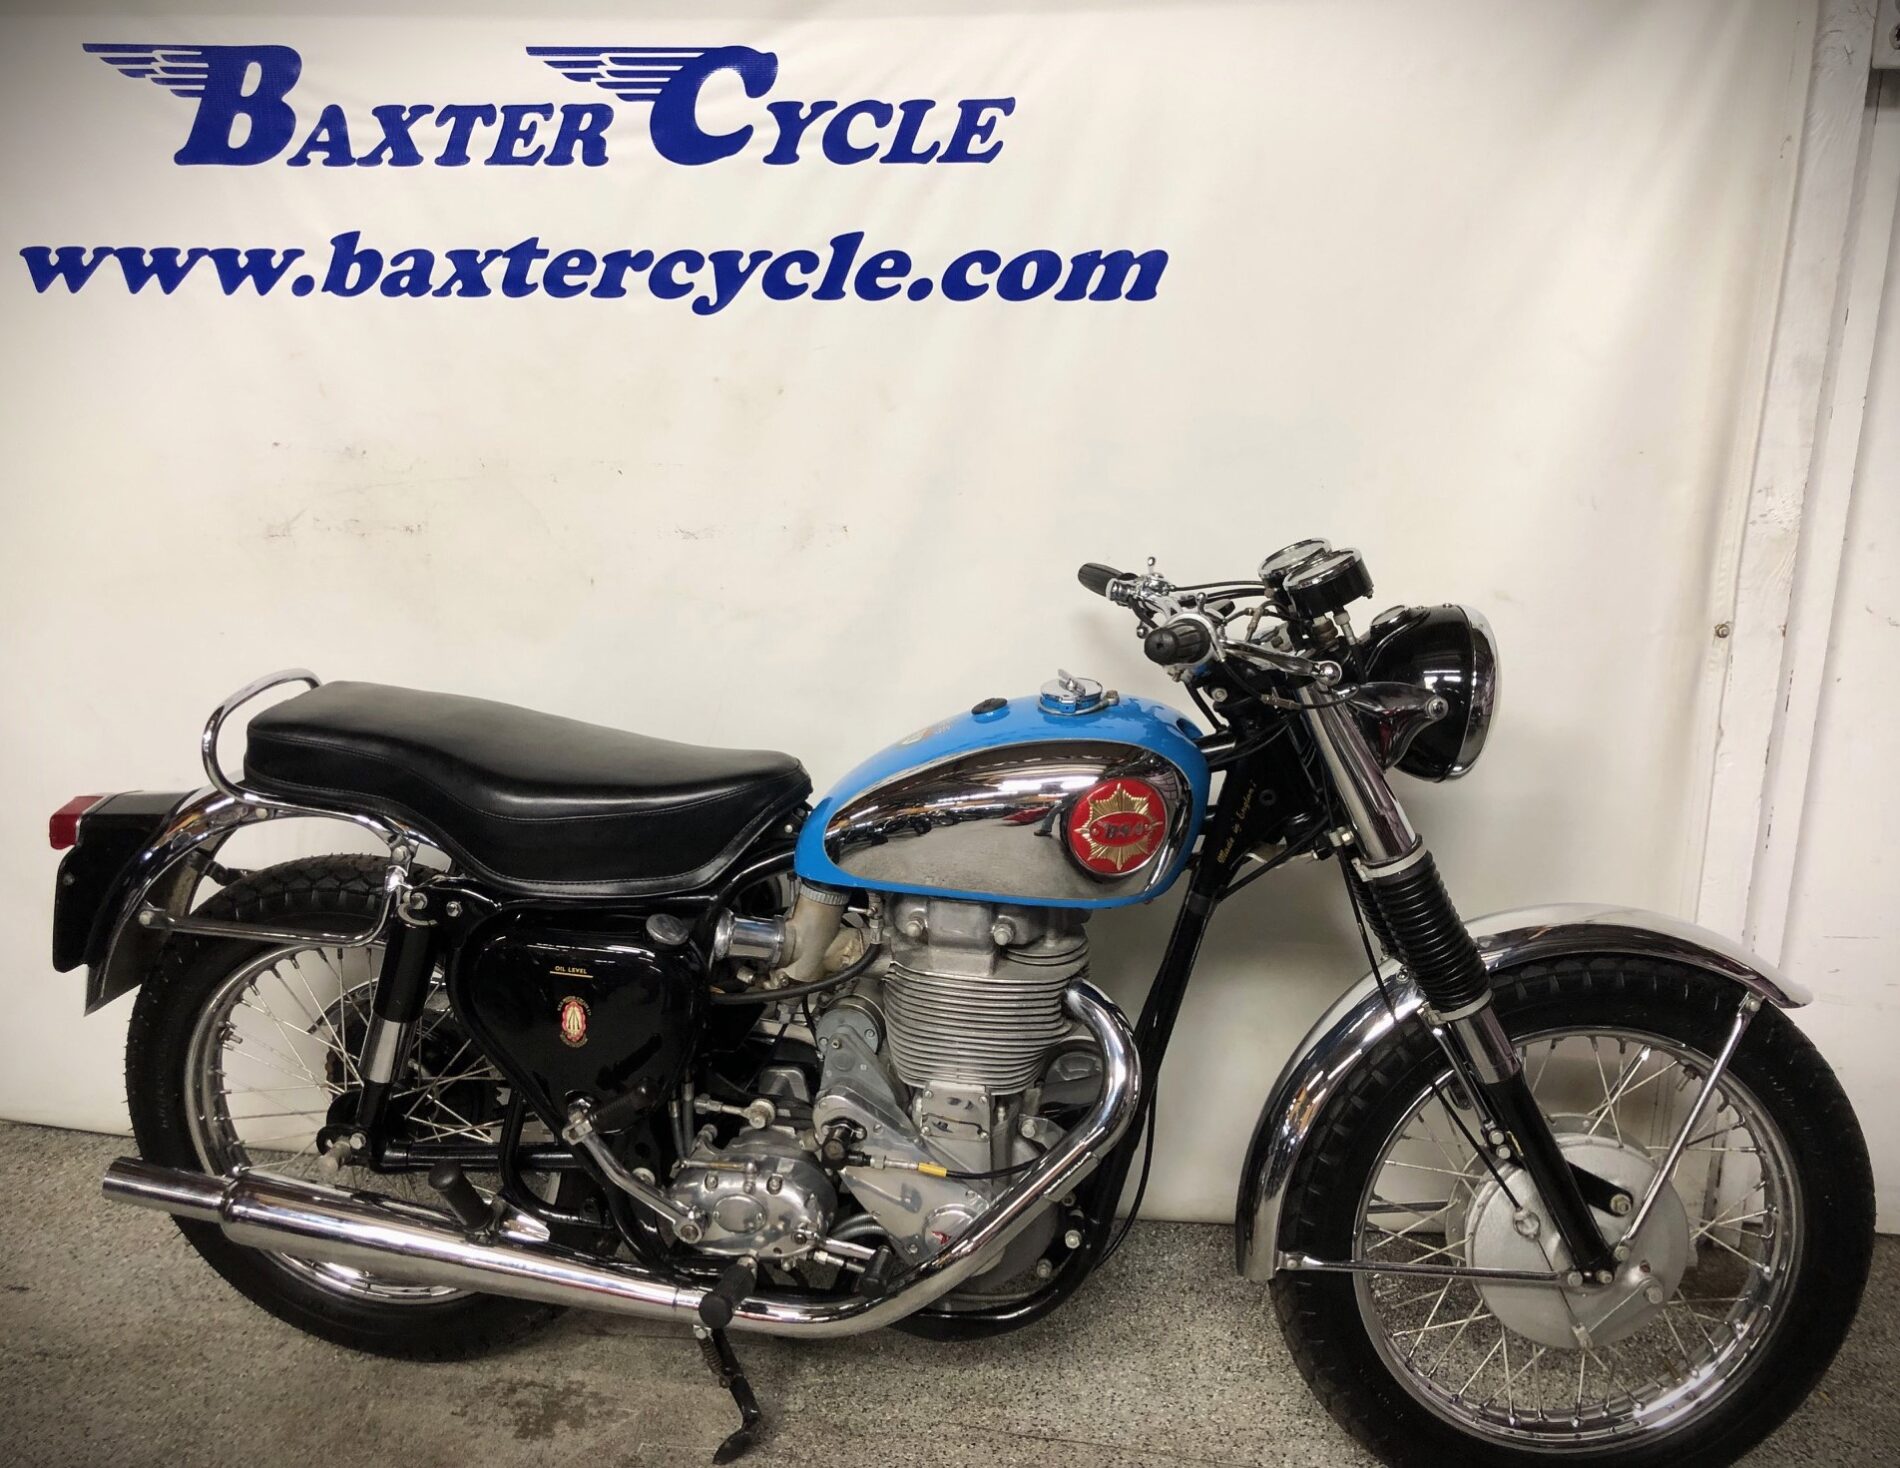 Chain Wax – Baxter Cycle